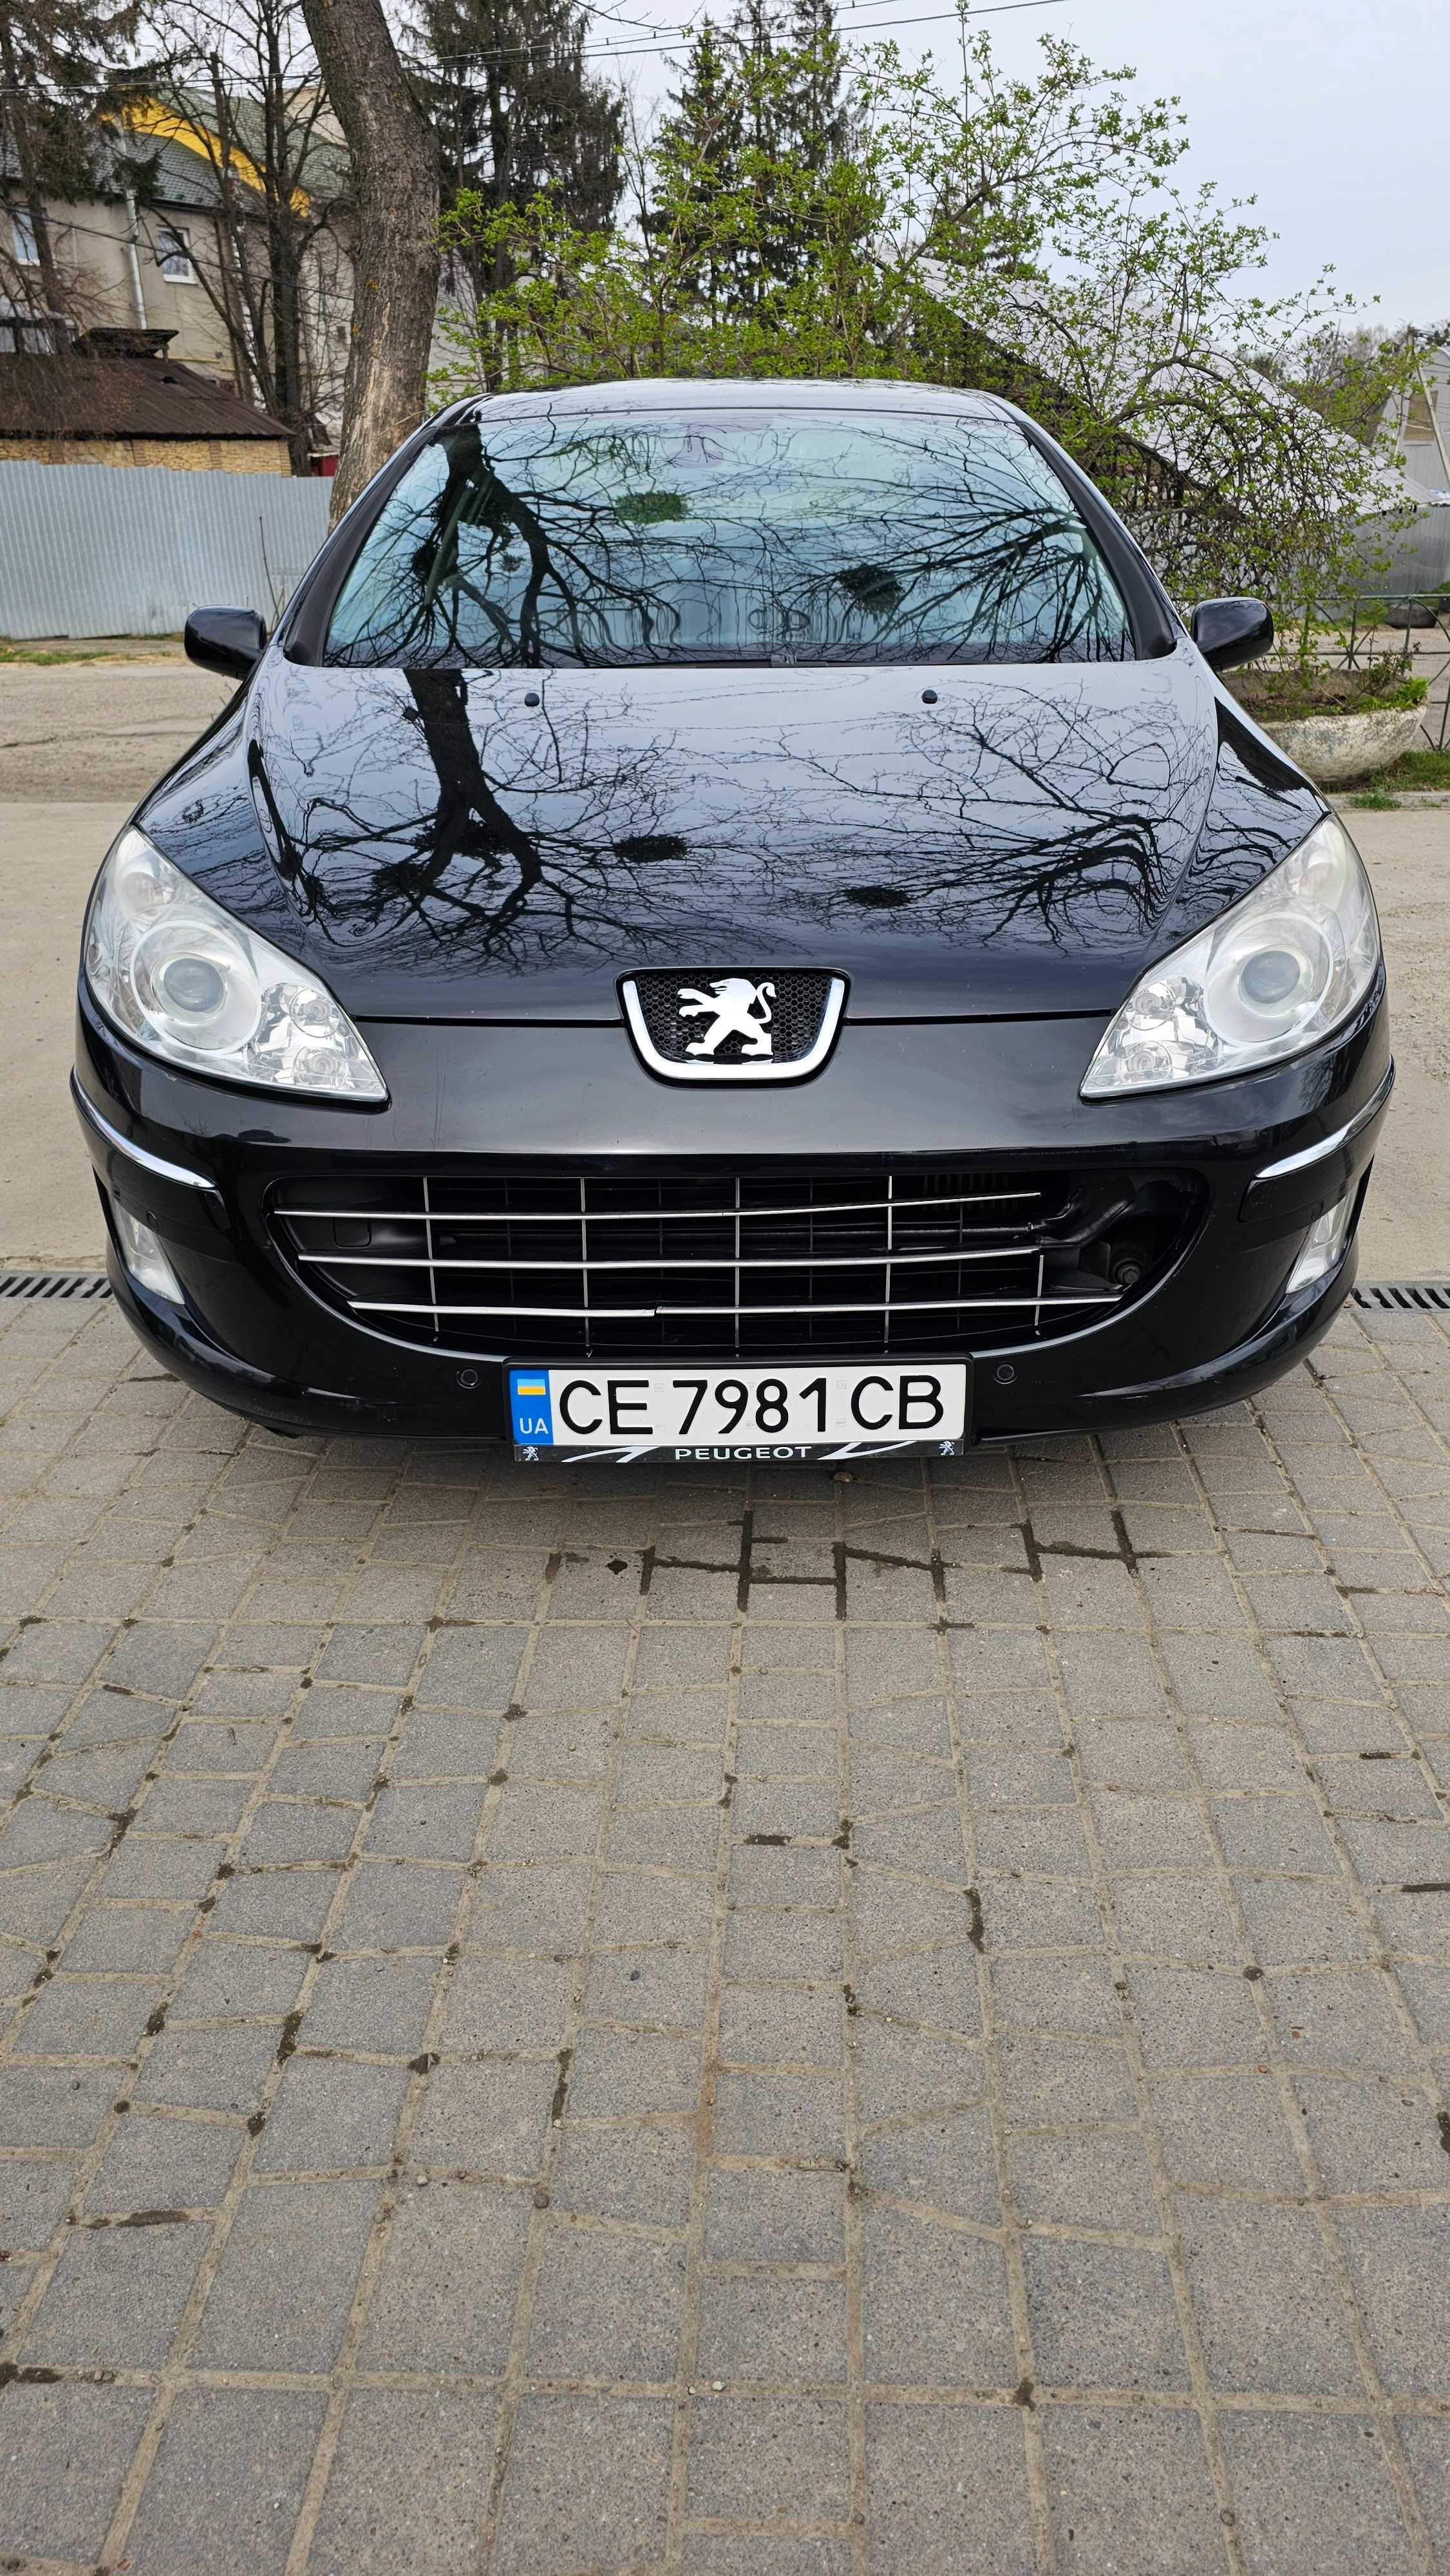 Продам Peugeot 407  2.0 HDI  2009р.